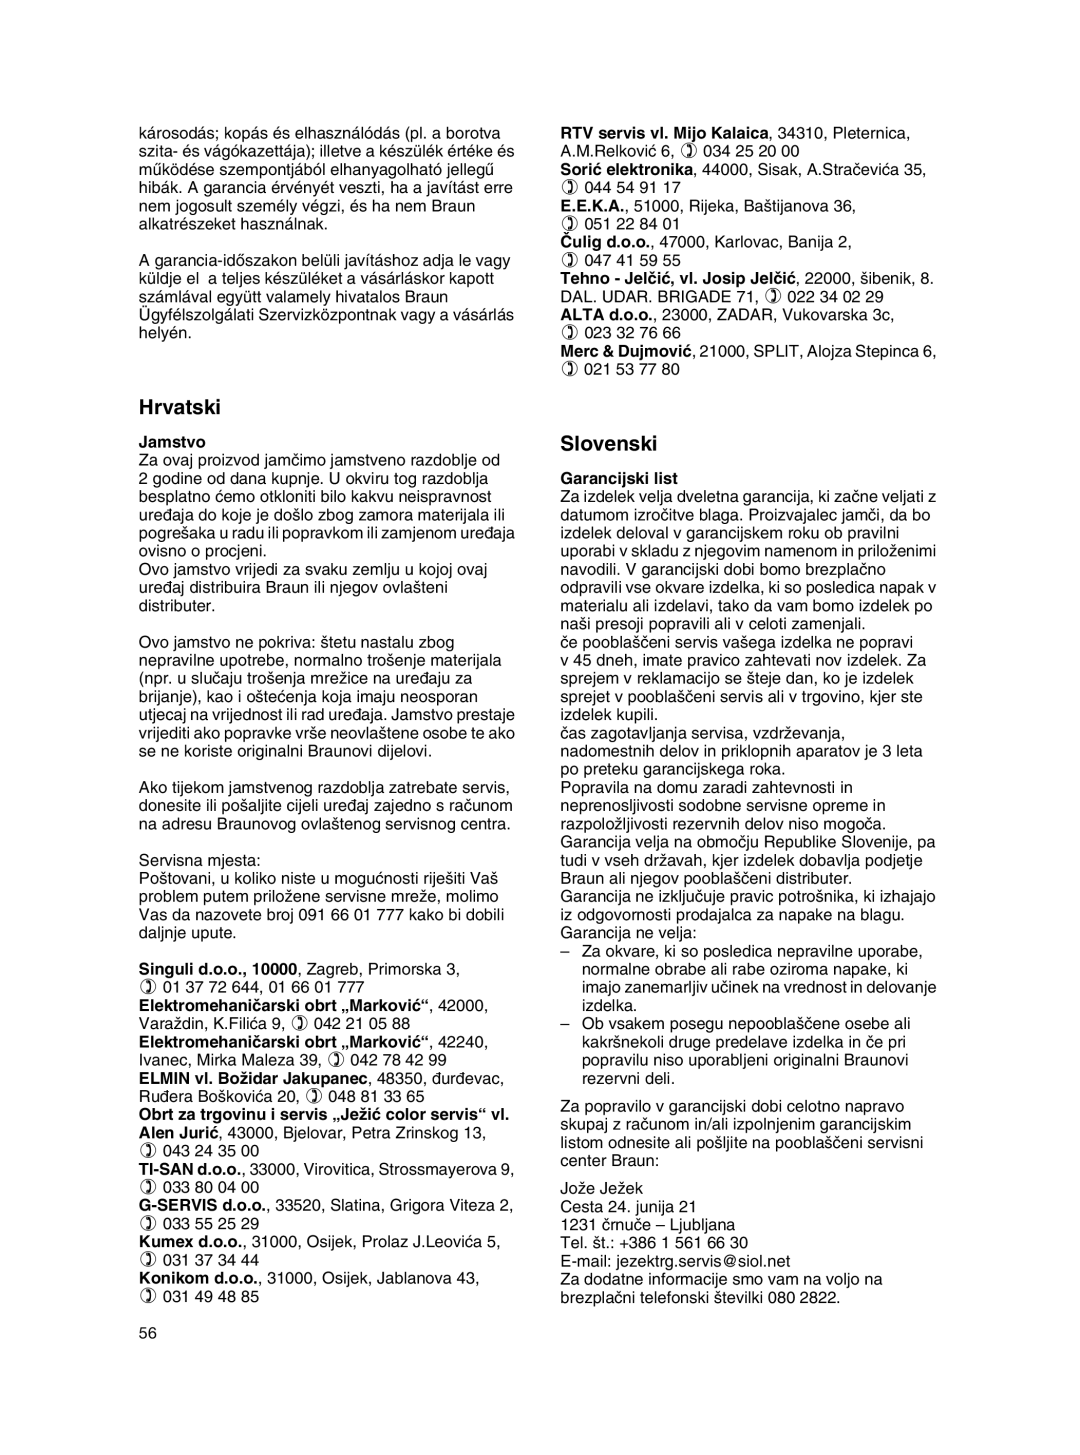 Braun MX 2050 BLACK manual Hrvatski, Slovenski, Jamstvo, Elektromehaniãarski obrt „Markoviç“, Garancijski list 